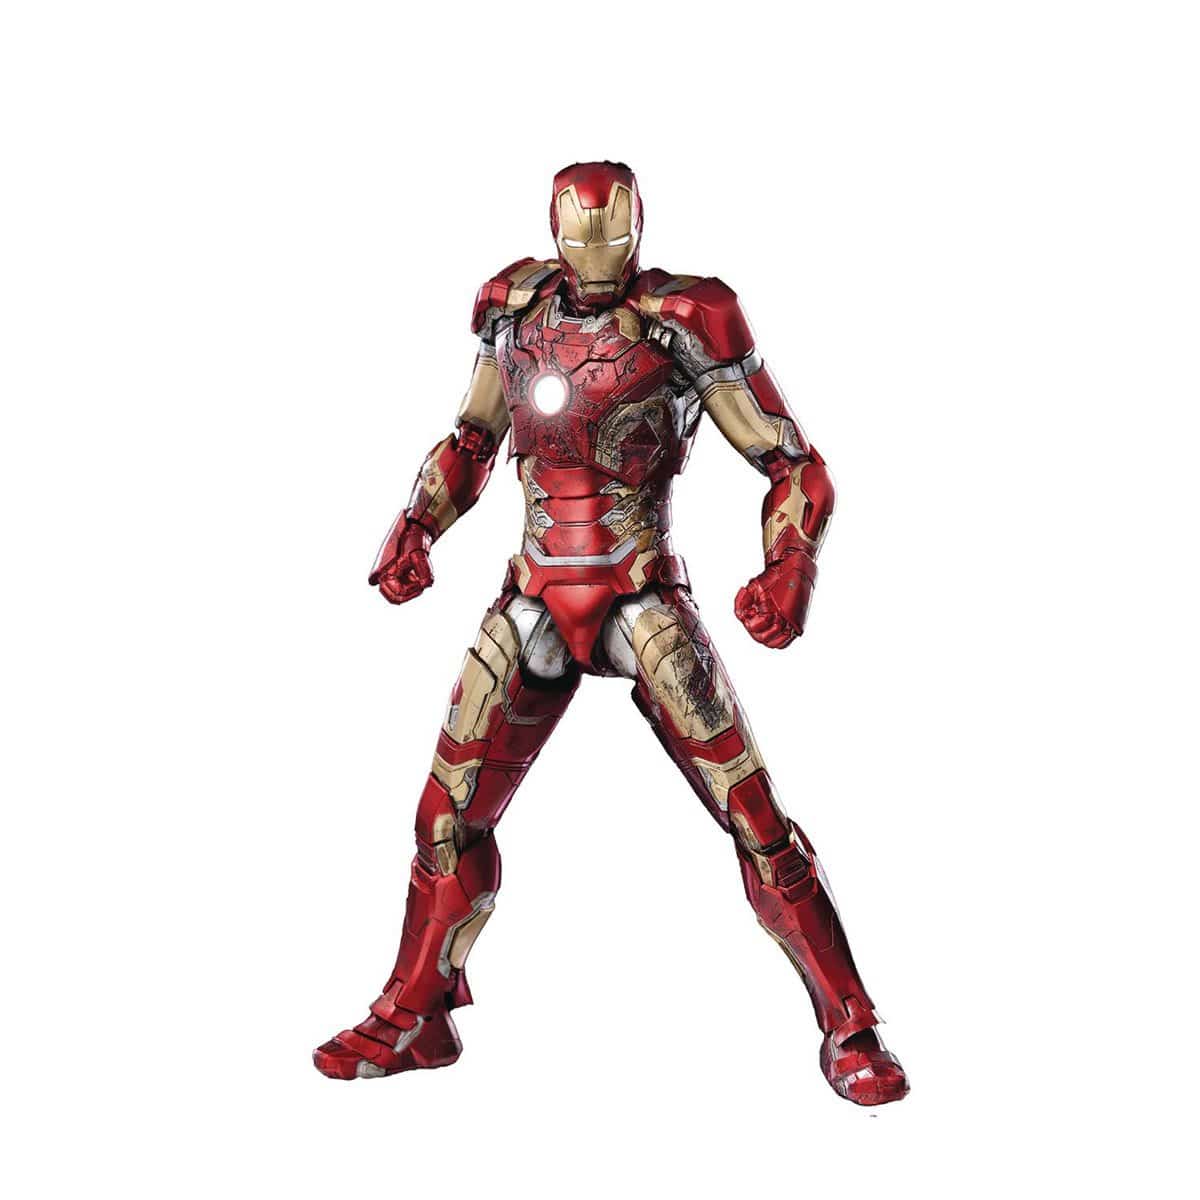 Threezero DLX Avengers: Infinity Saga Iron Man Mark 43 Battle Damage 1/12 Scale Action Figure